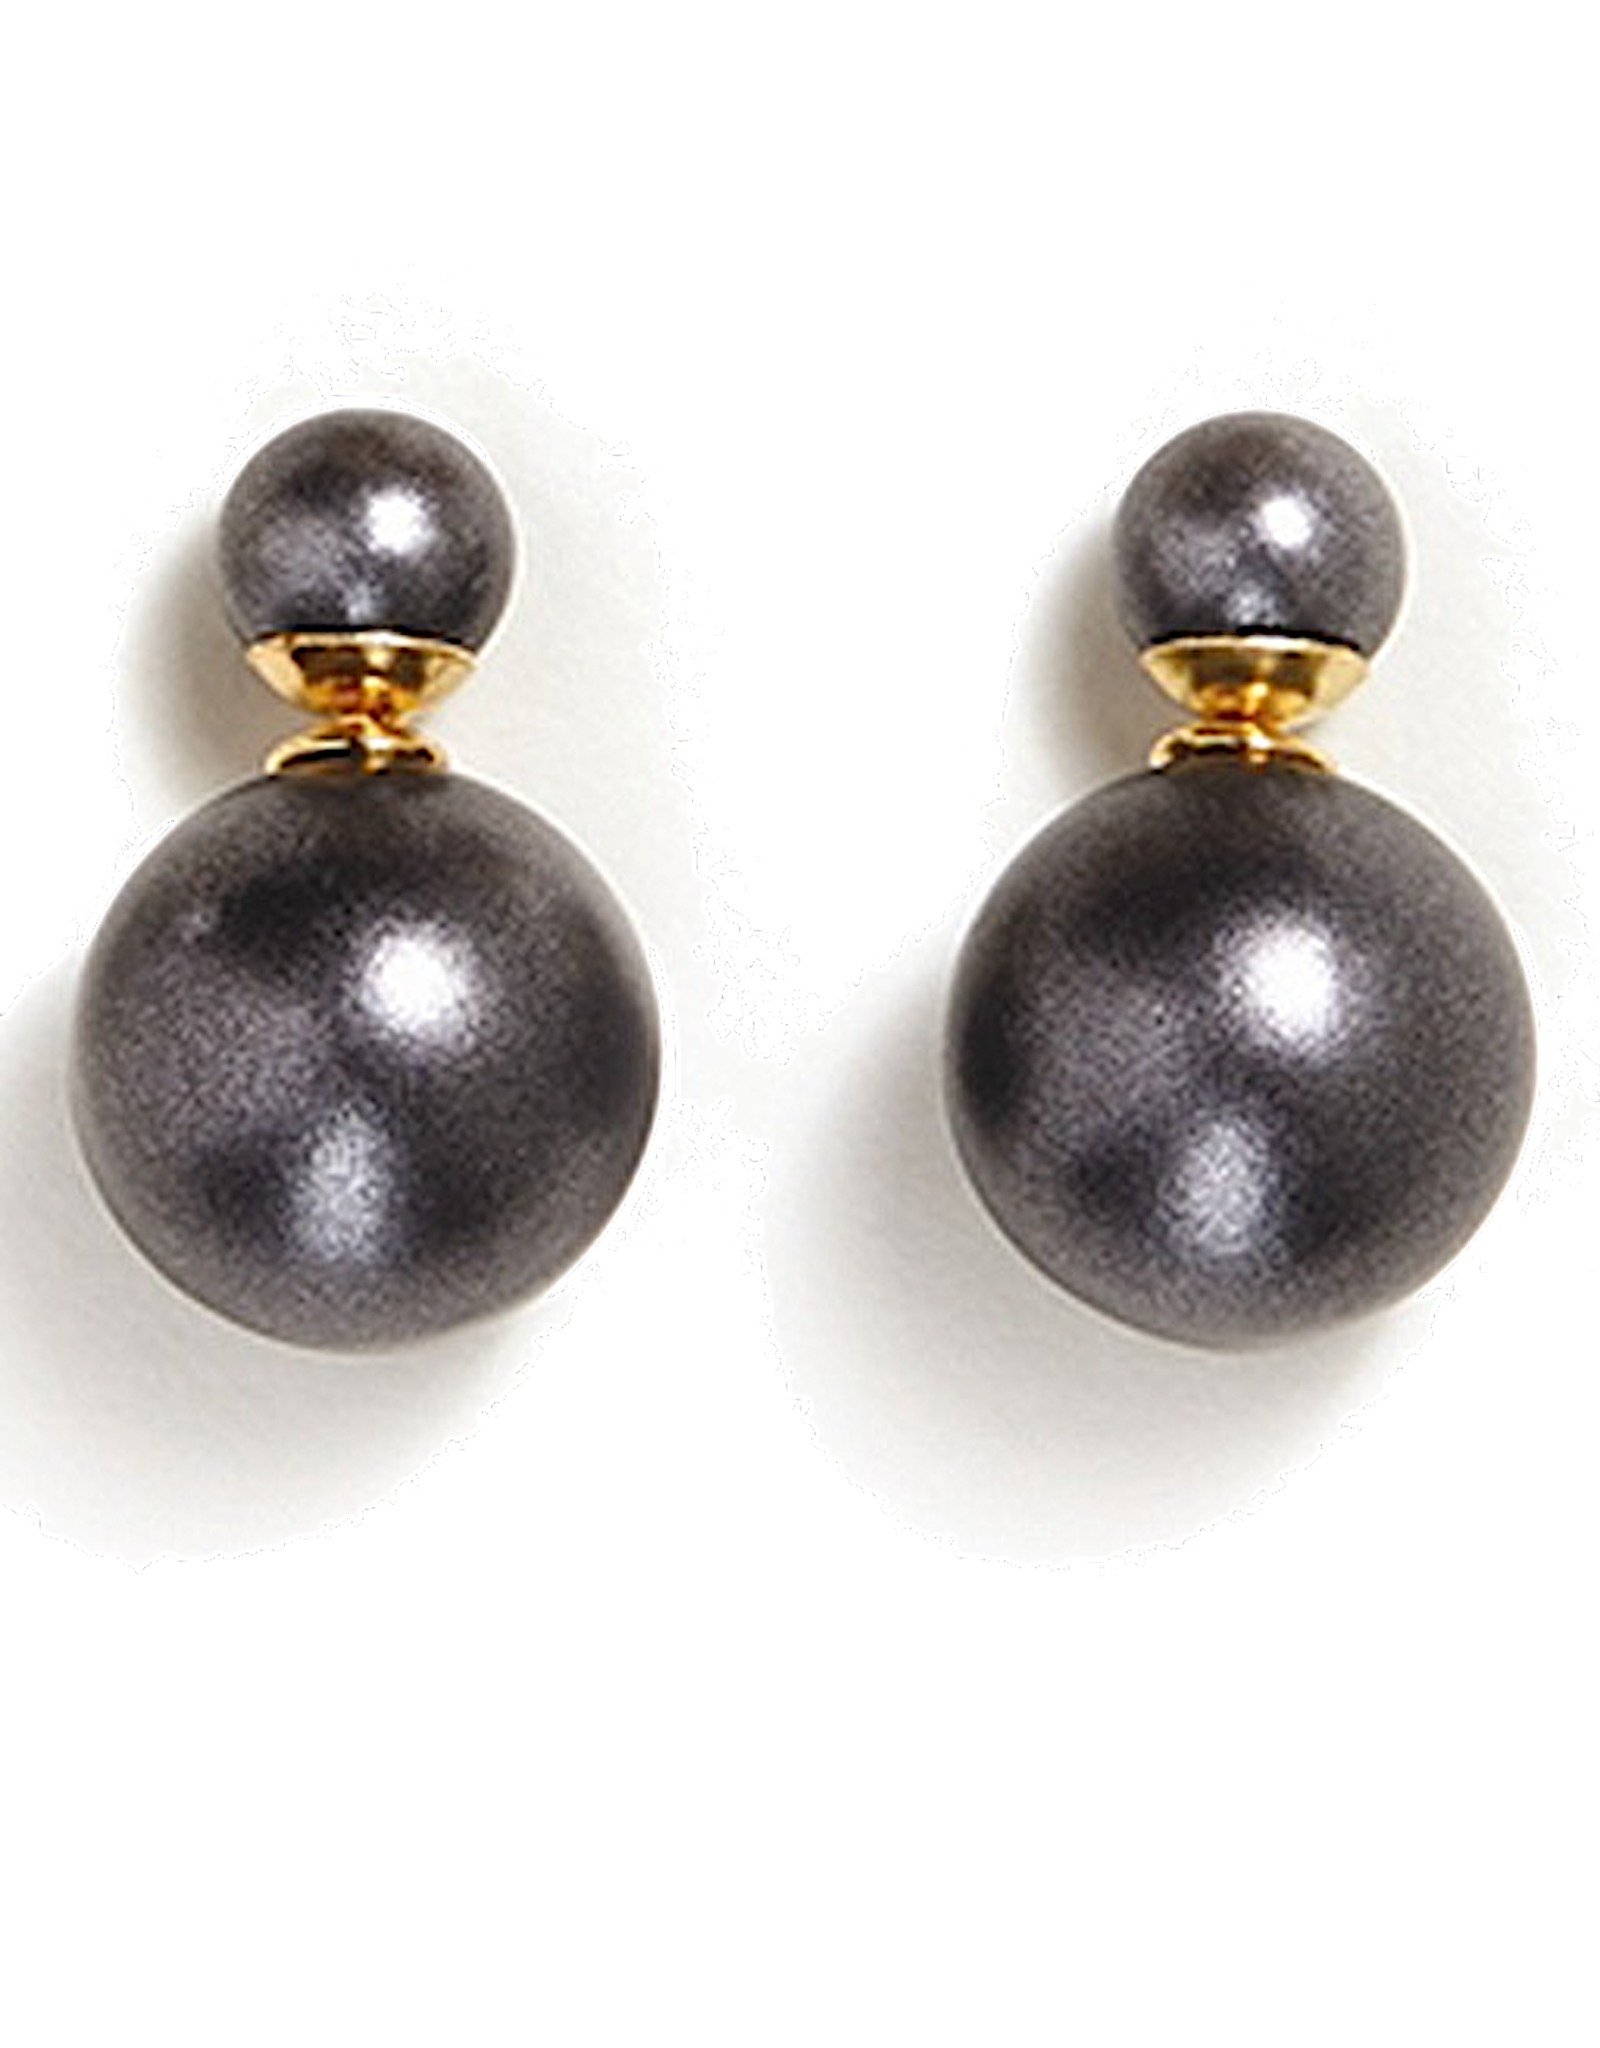 Twos Company Double Pearl Earrings Dark Grey Glass